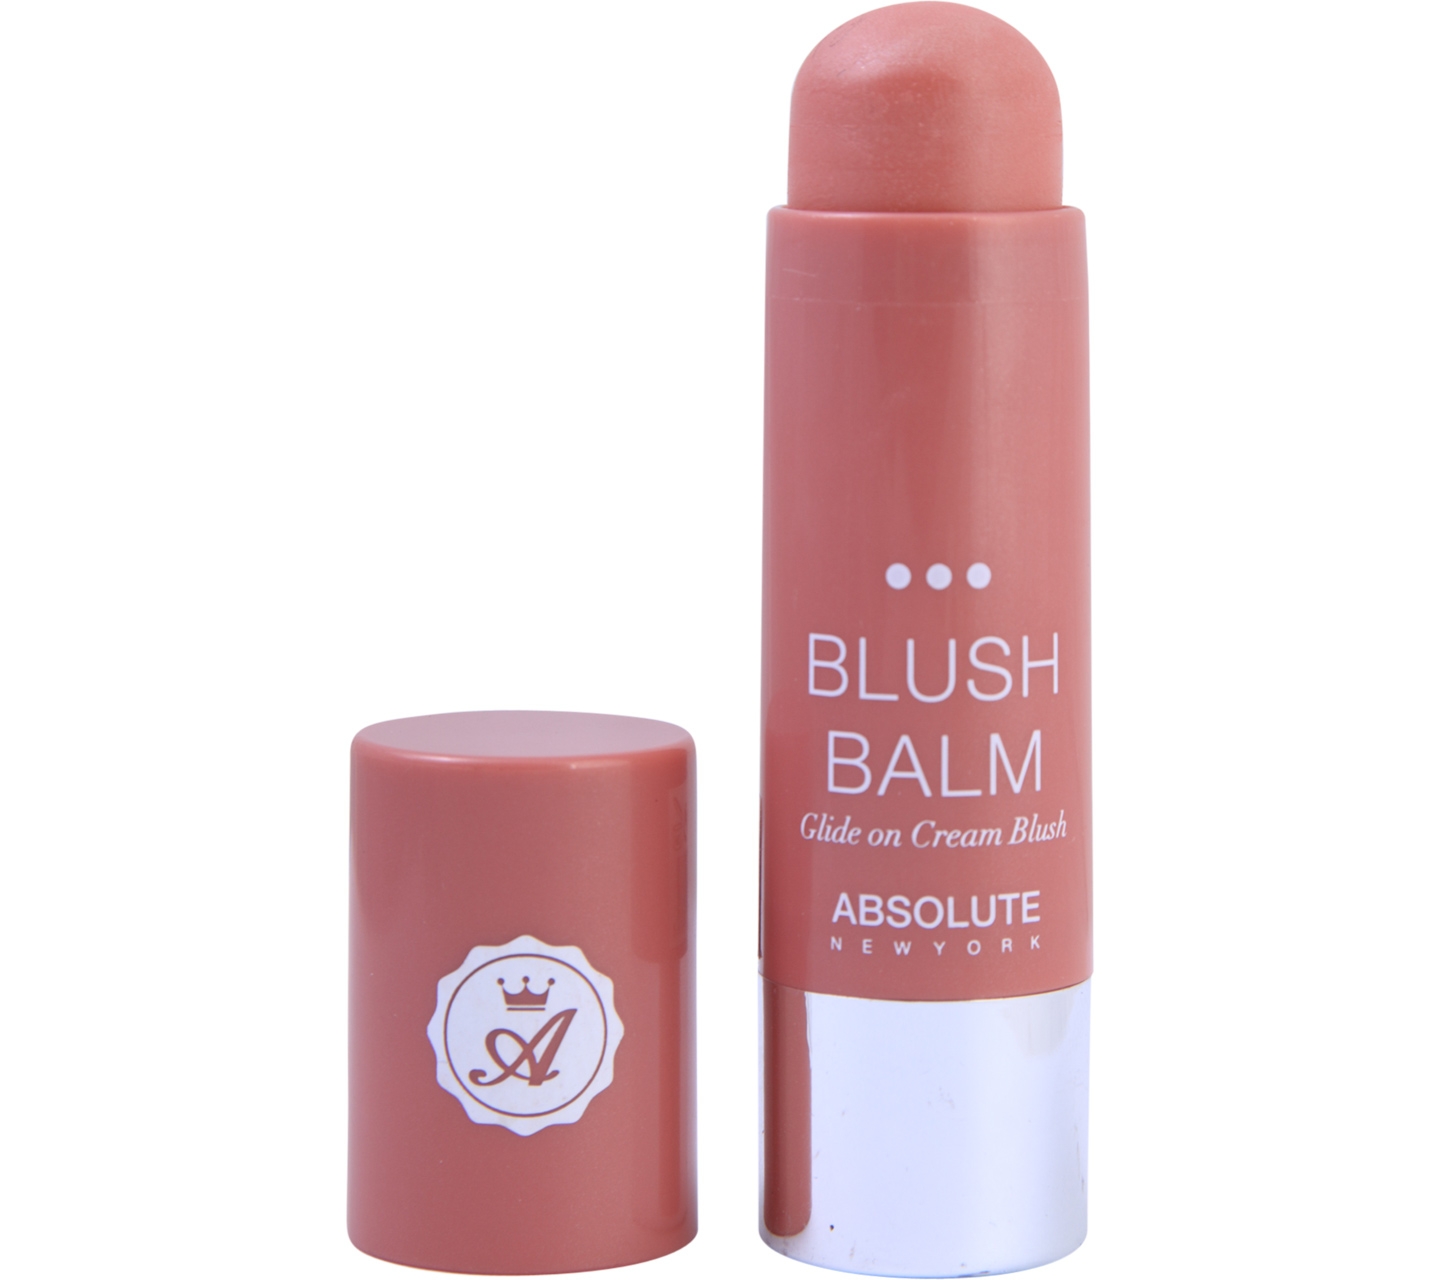 Absolute Blush Blam Glide on Cream Blush Faces